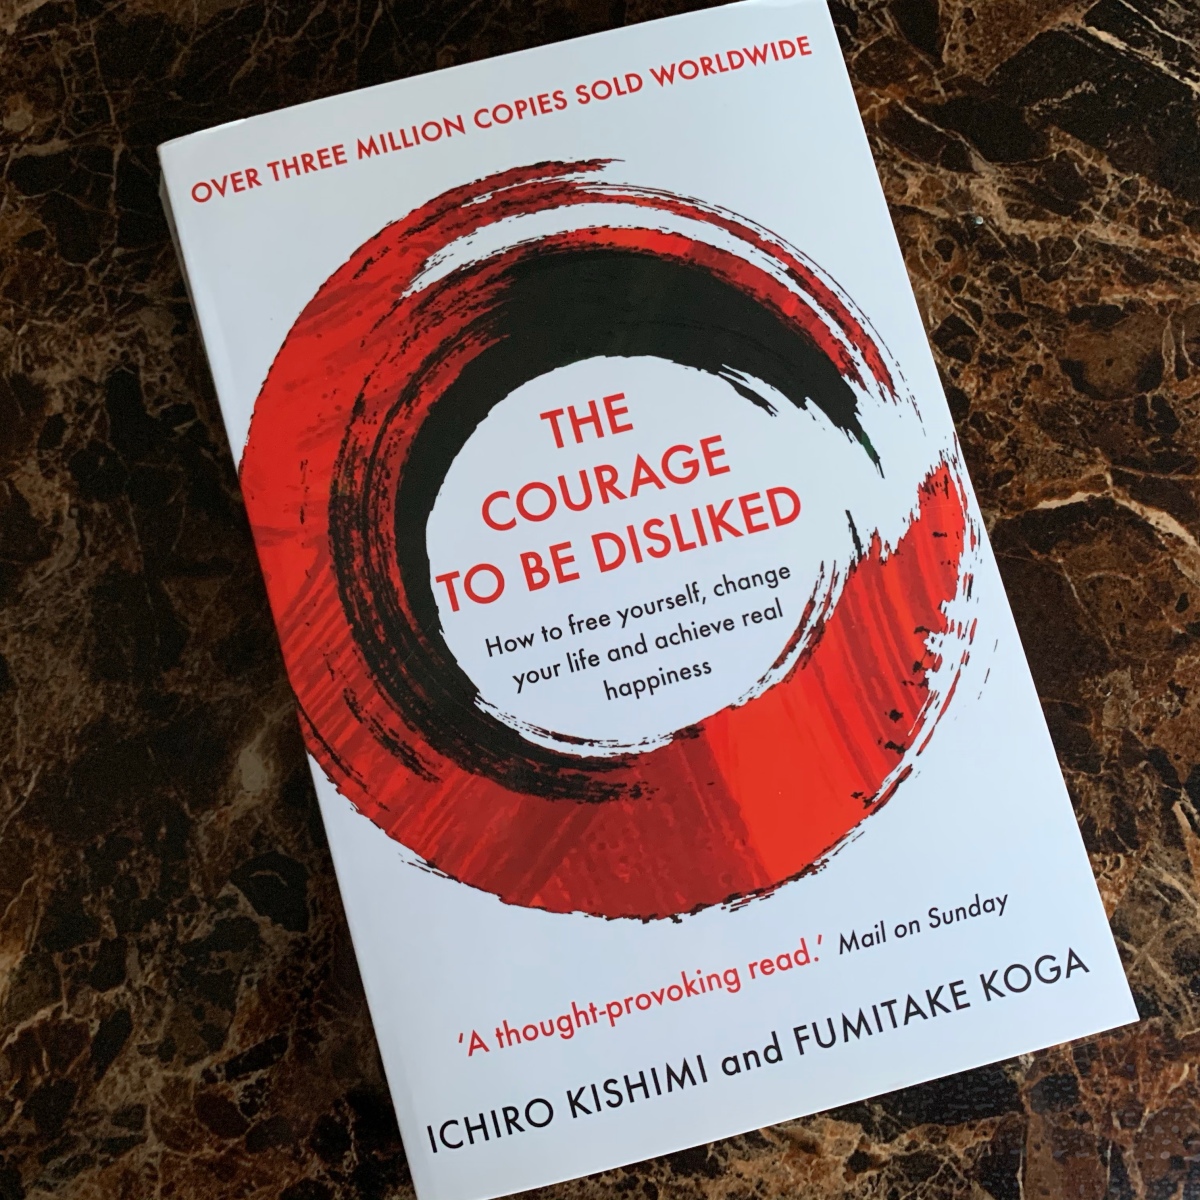 ‘The Courage to be Disliked’ by Ichiro Kishimi and Fumitake Koga